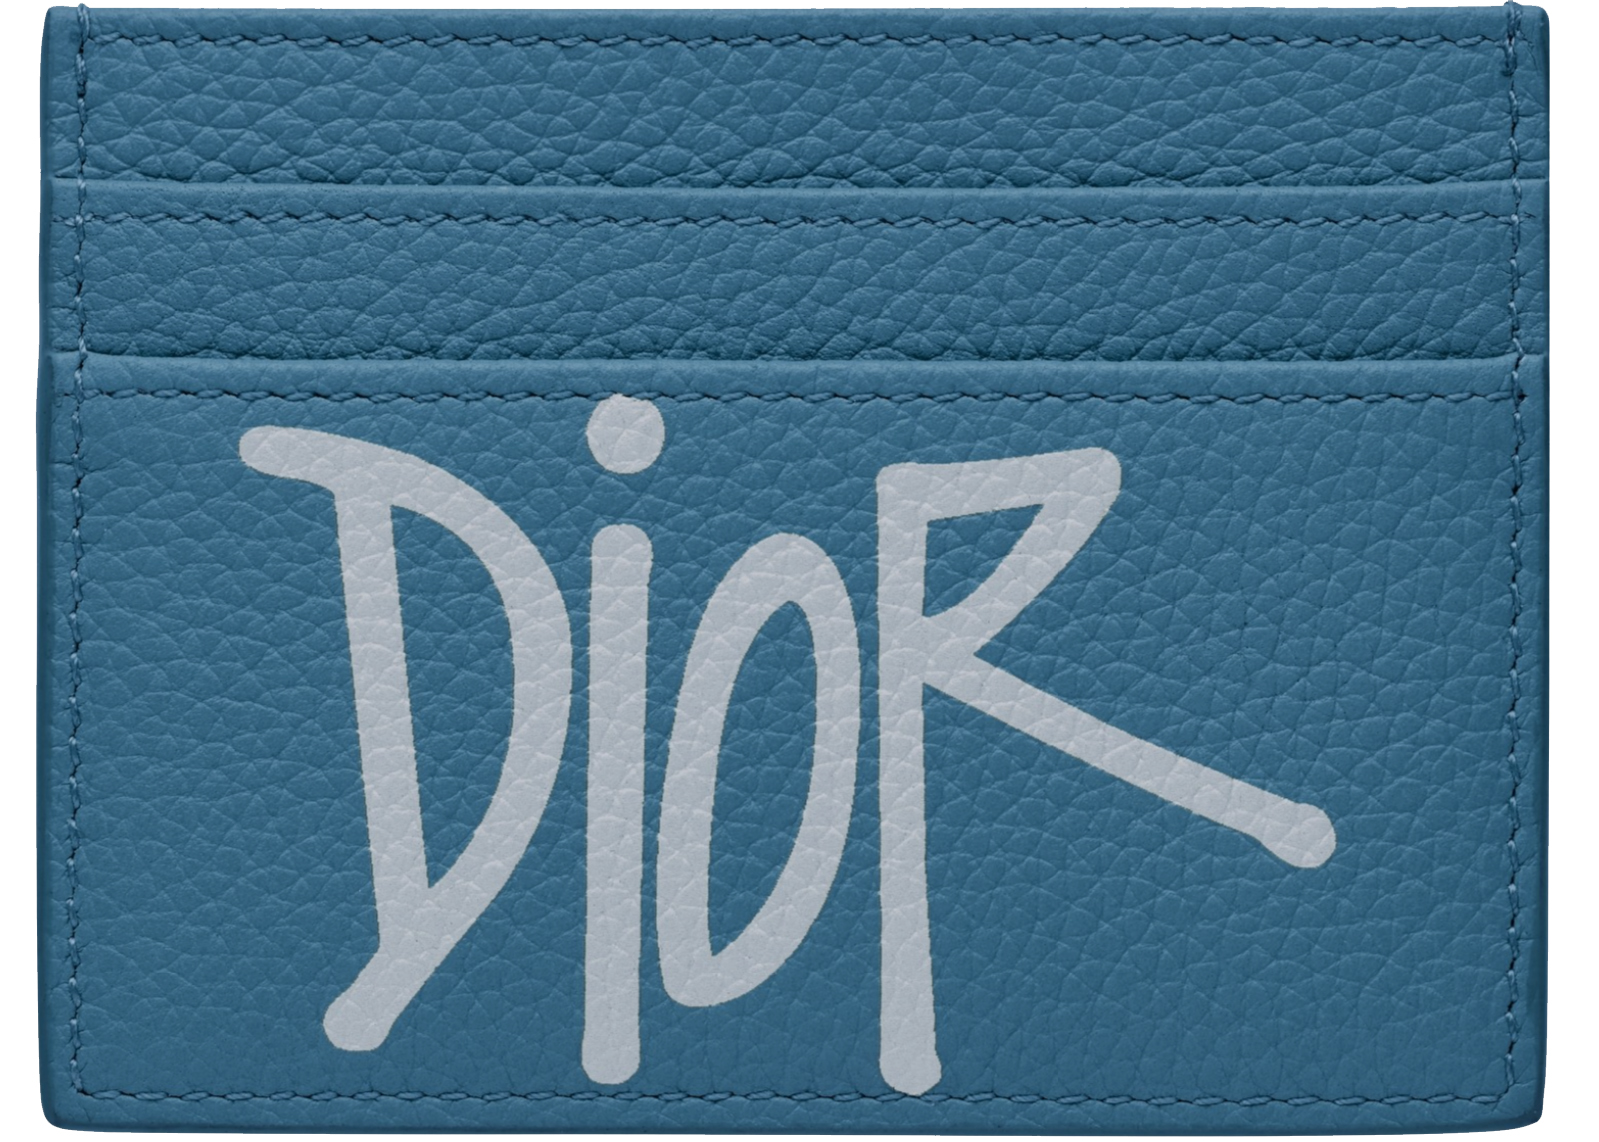 Dior x Shawn Stussy Long Wallet Black  fixocargocom